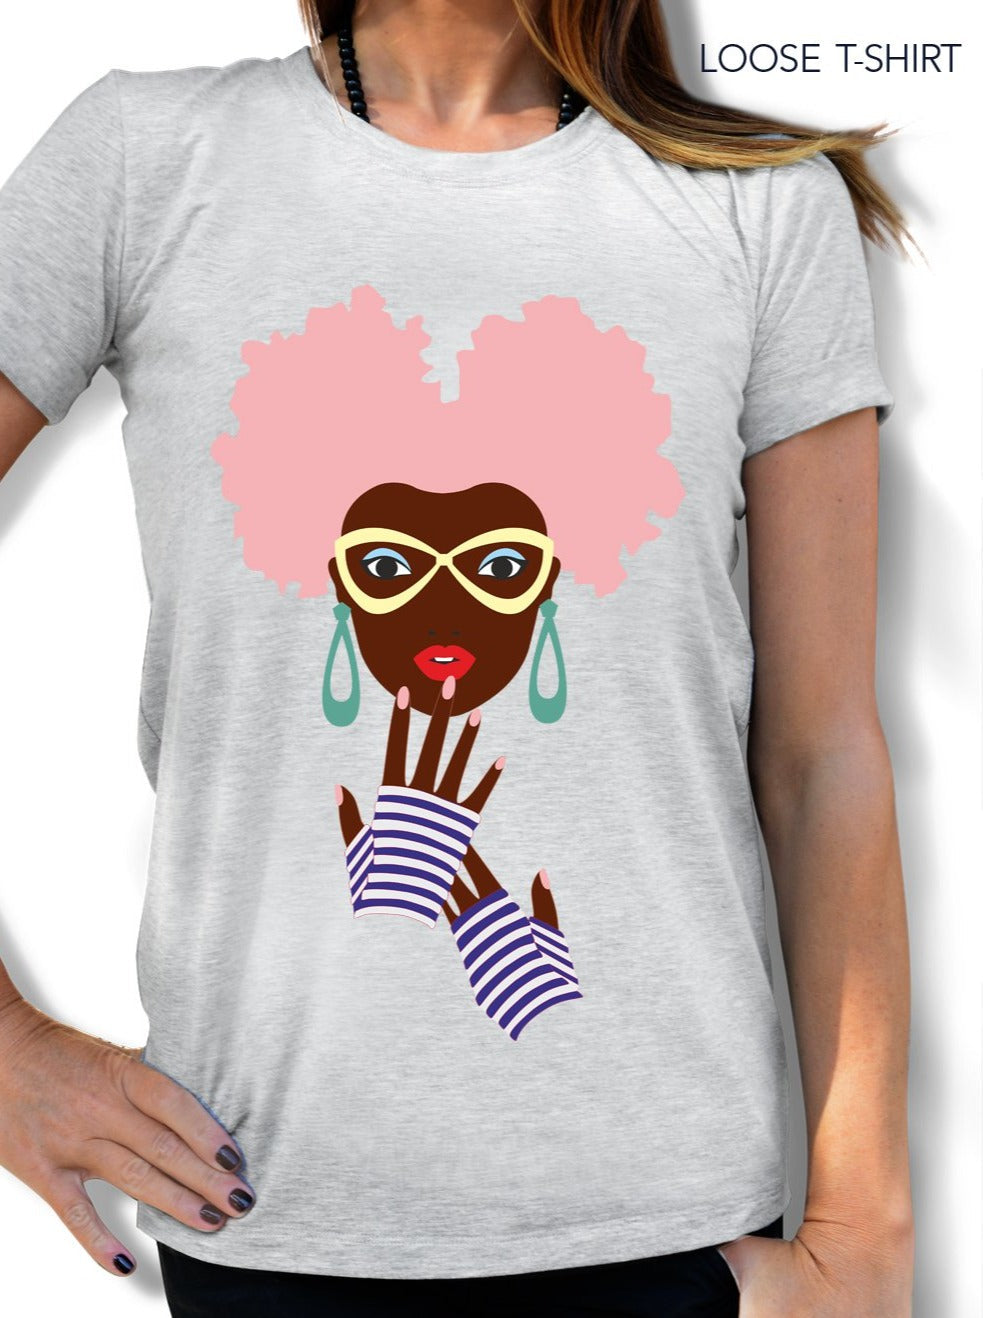 African women Painted t-shirt